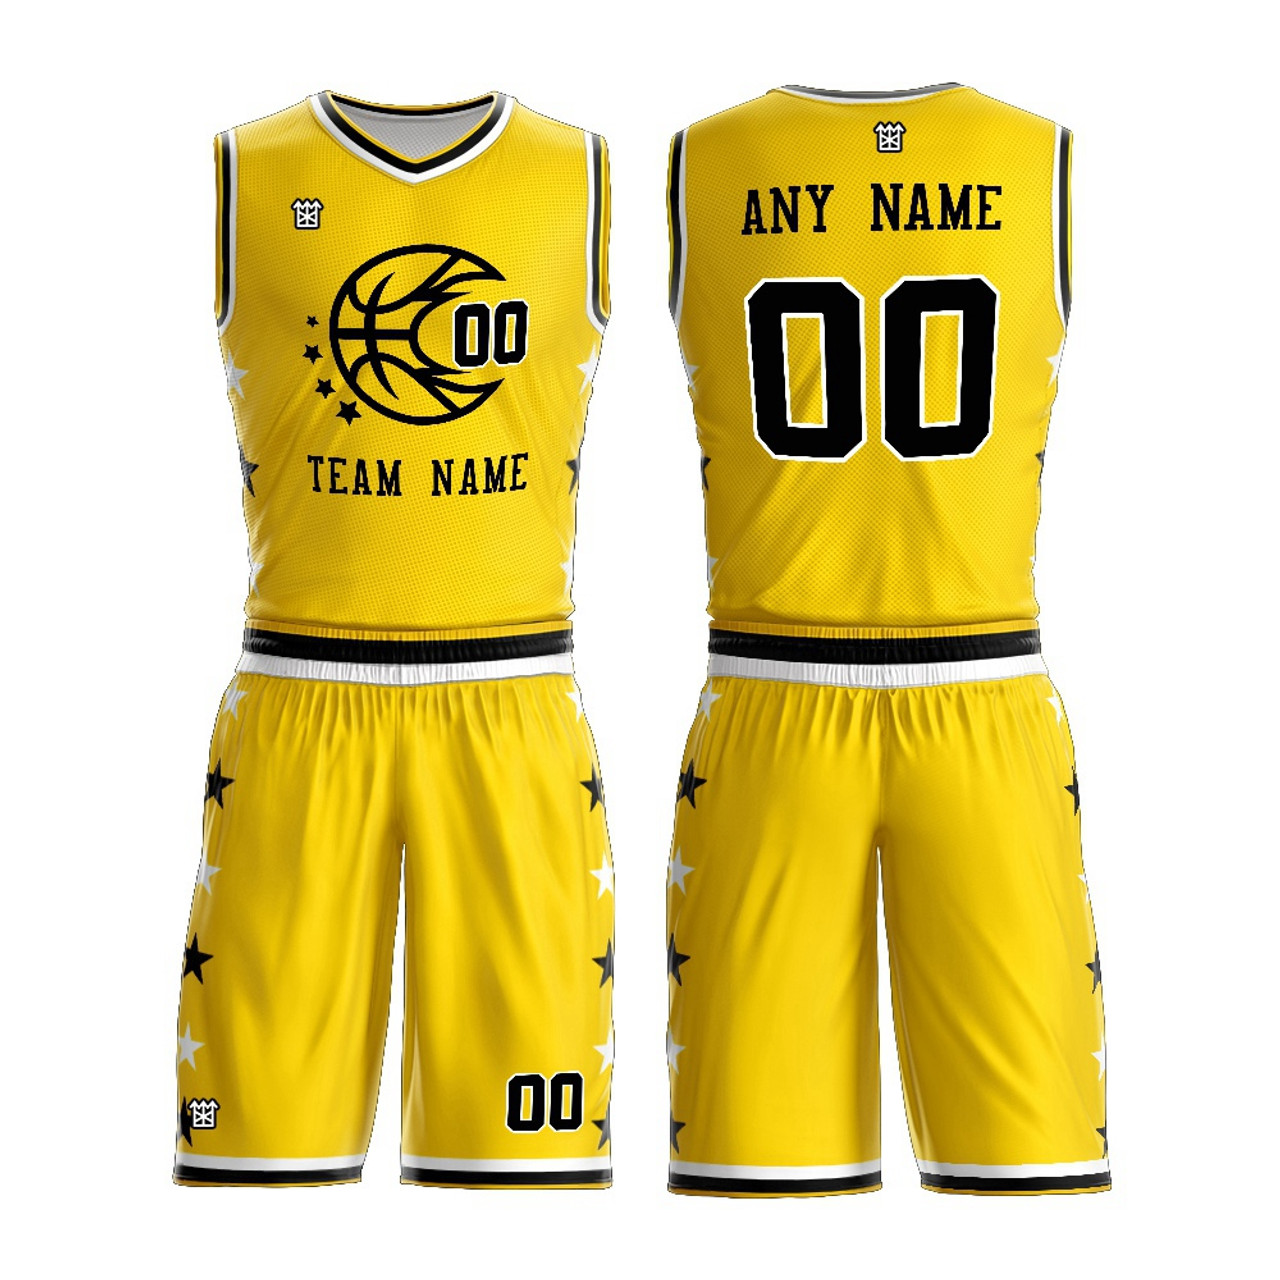 basketball jersey yellow design